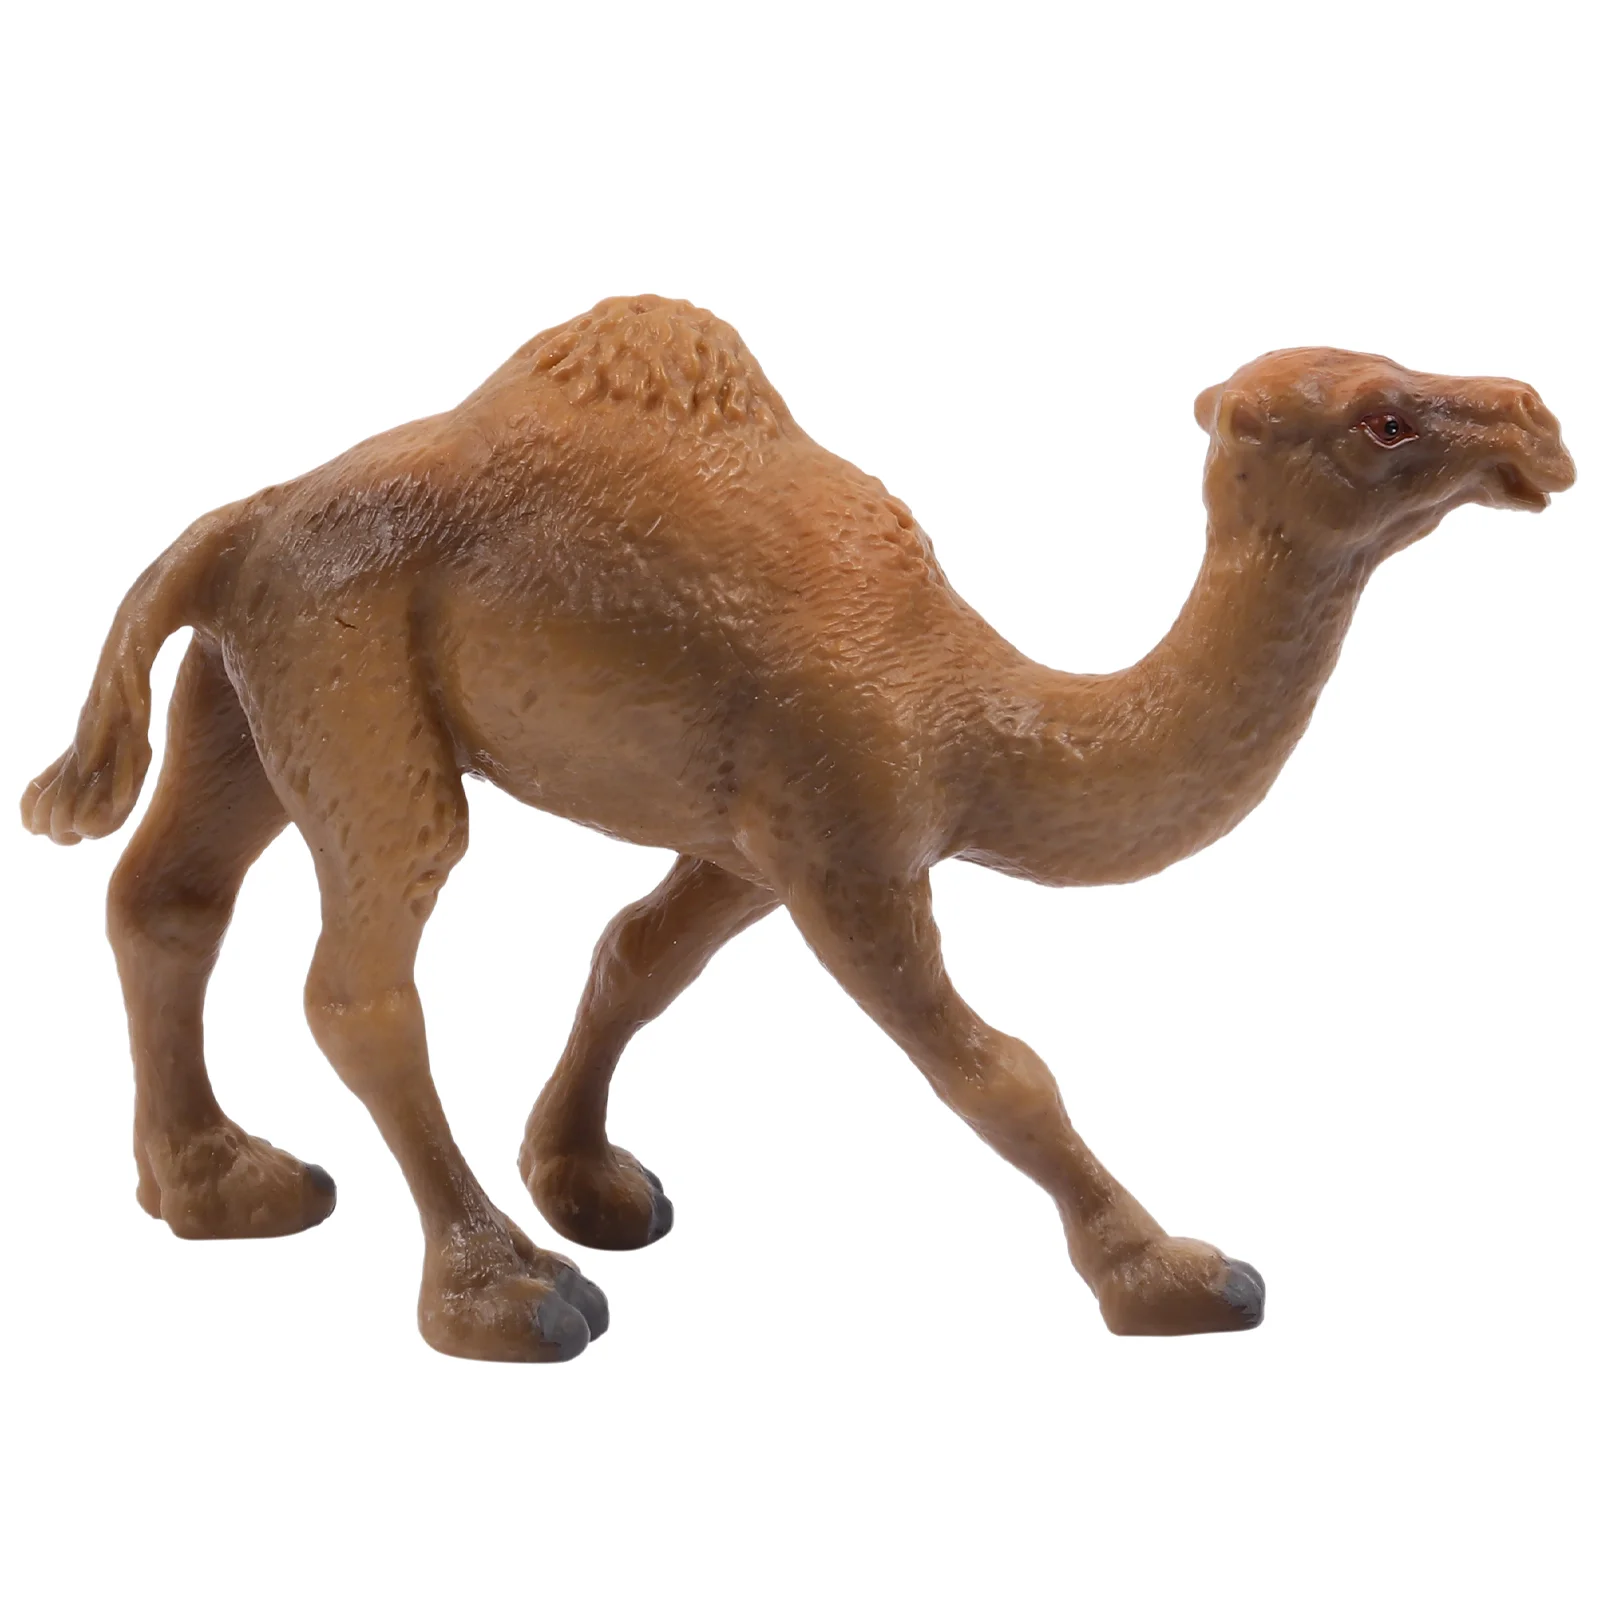 

Camel Animal Toy Toys Figurines Figure Educational Figurine Figures Ornament Simulation Model Adornment Wildlife Llama Jungle